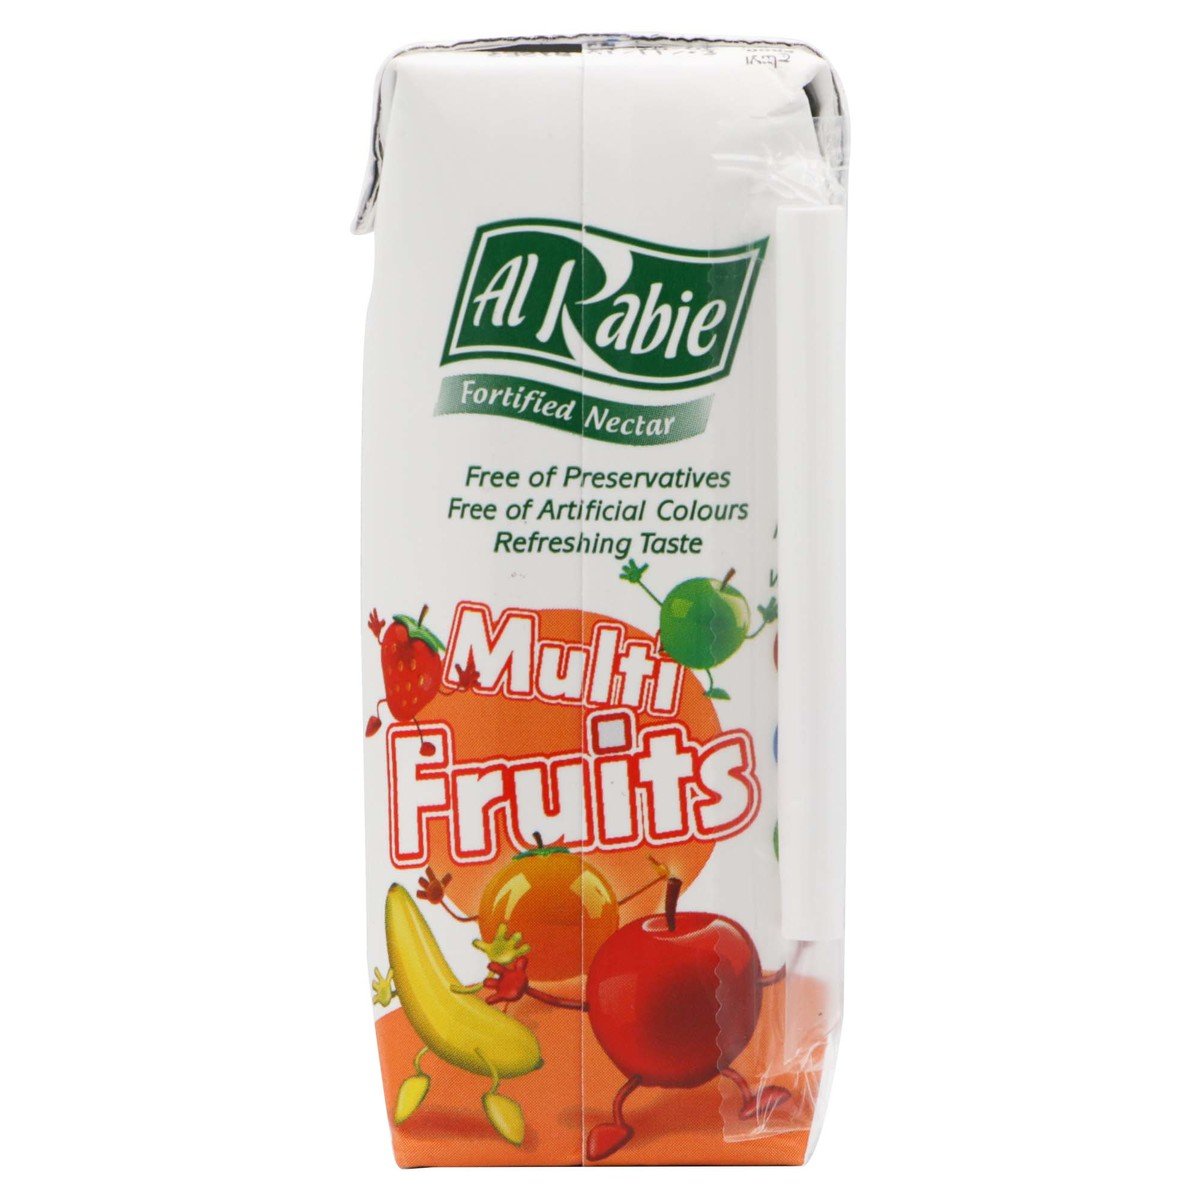 Al Rabie Multi Fruits Fortified Nectar 24 x 120ml